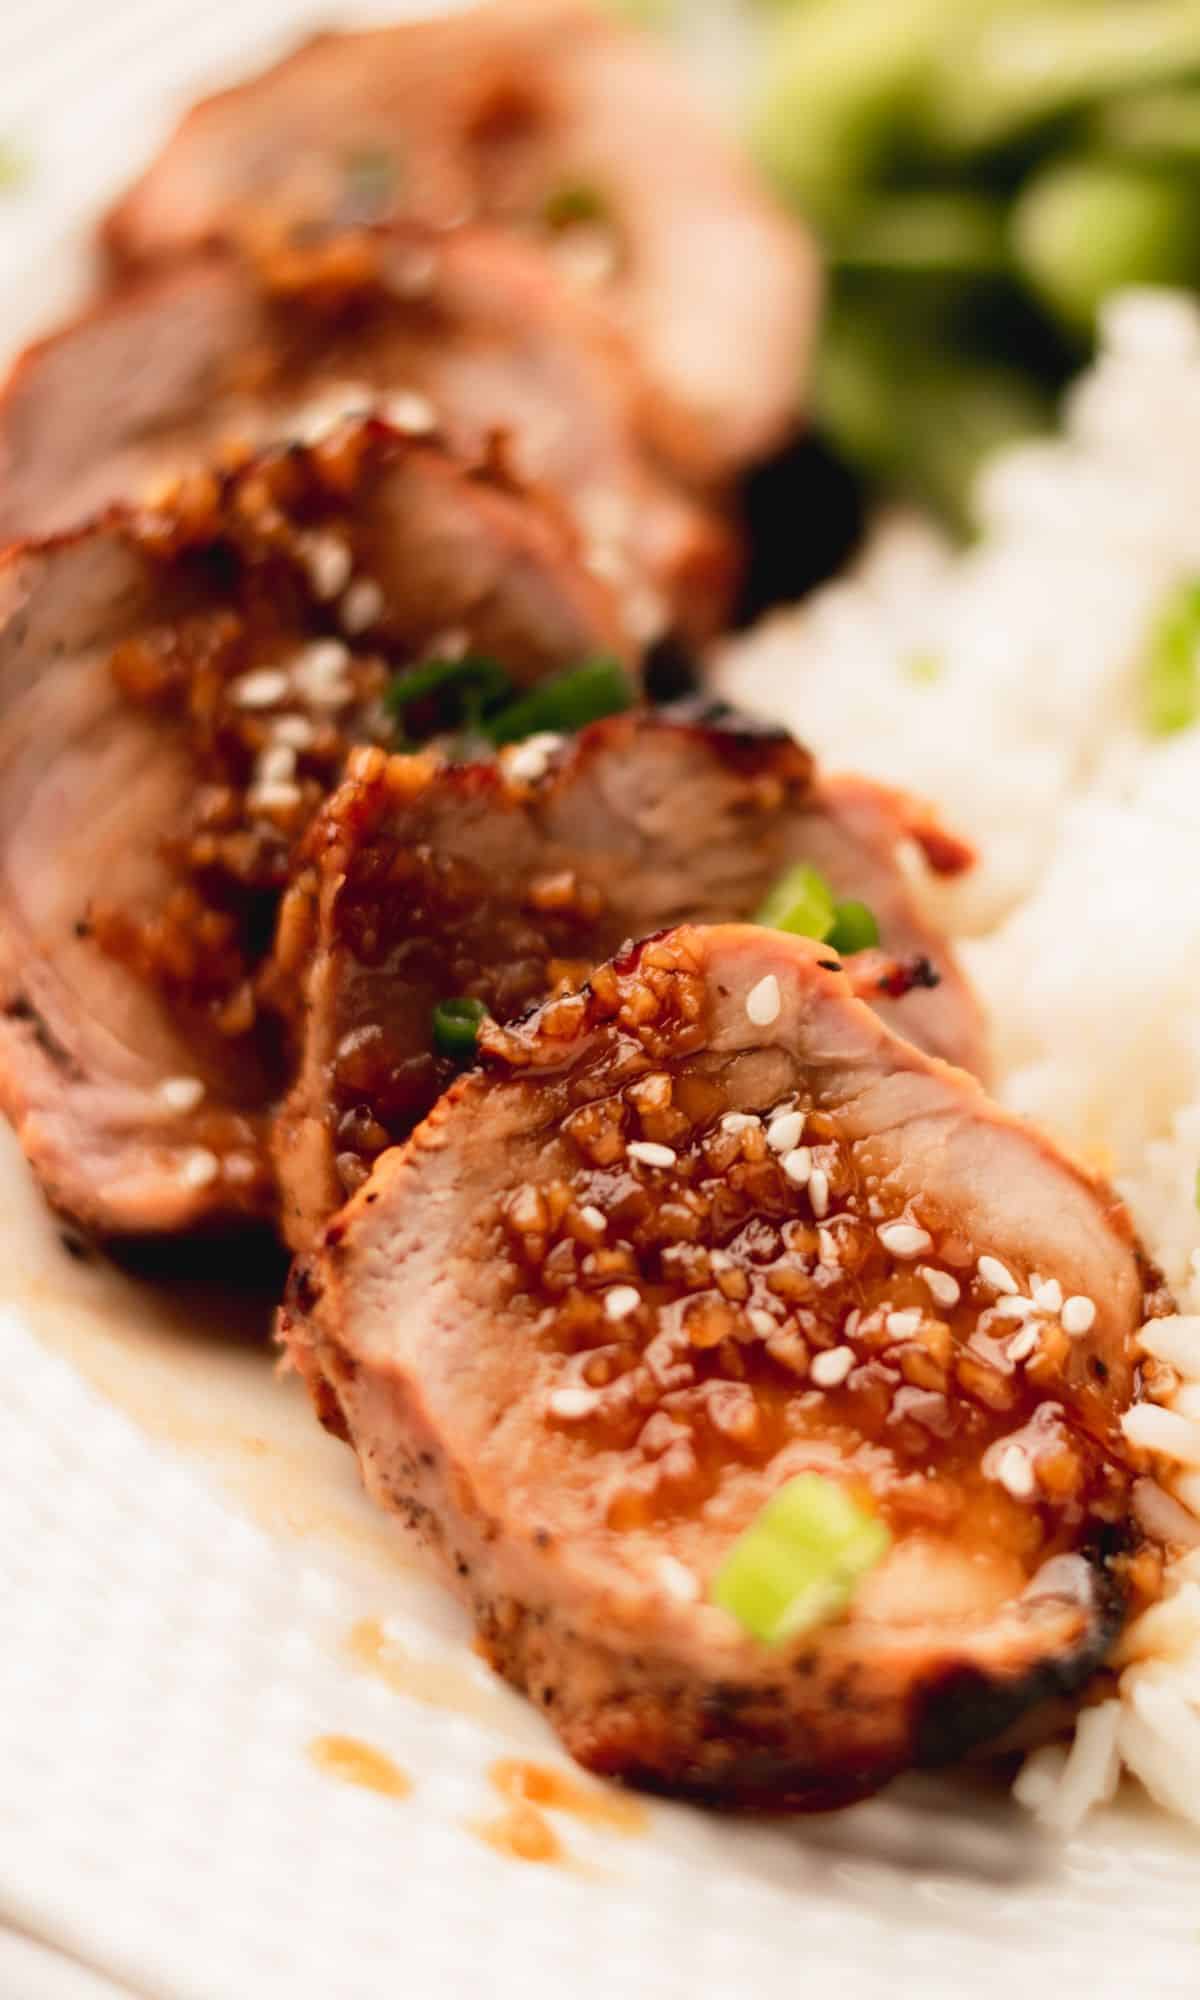 Honey garlic pork tenderloin garnished with sesame seeds on a white plate.